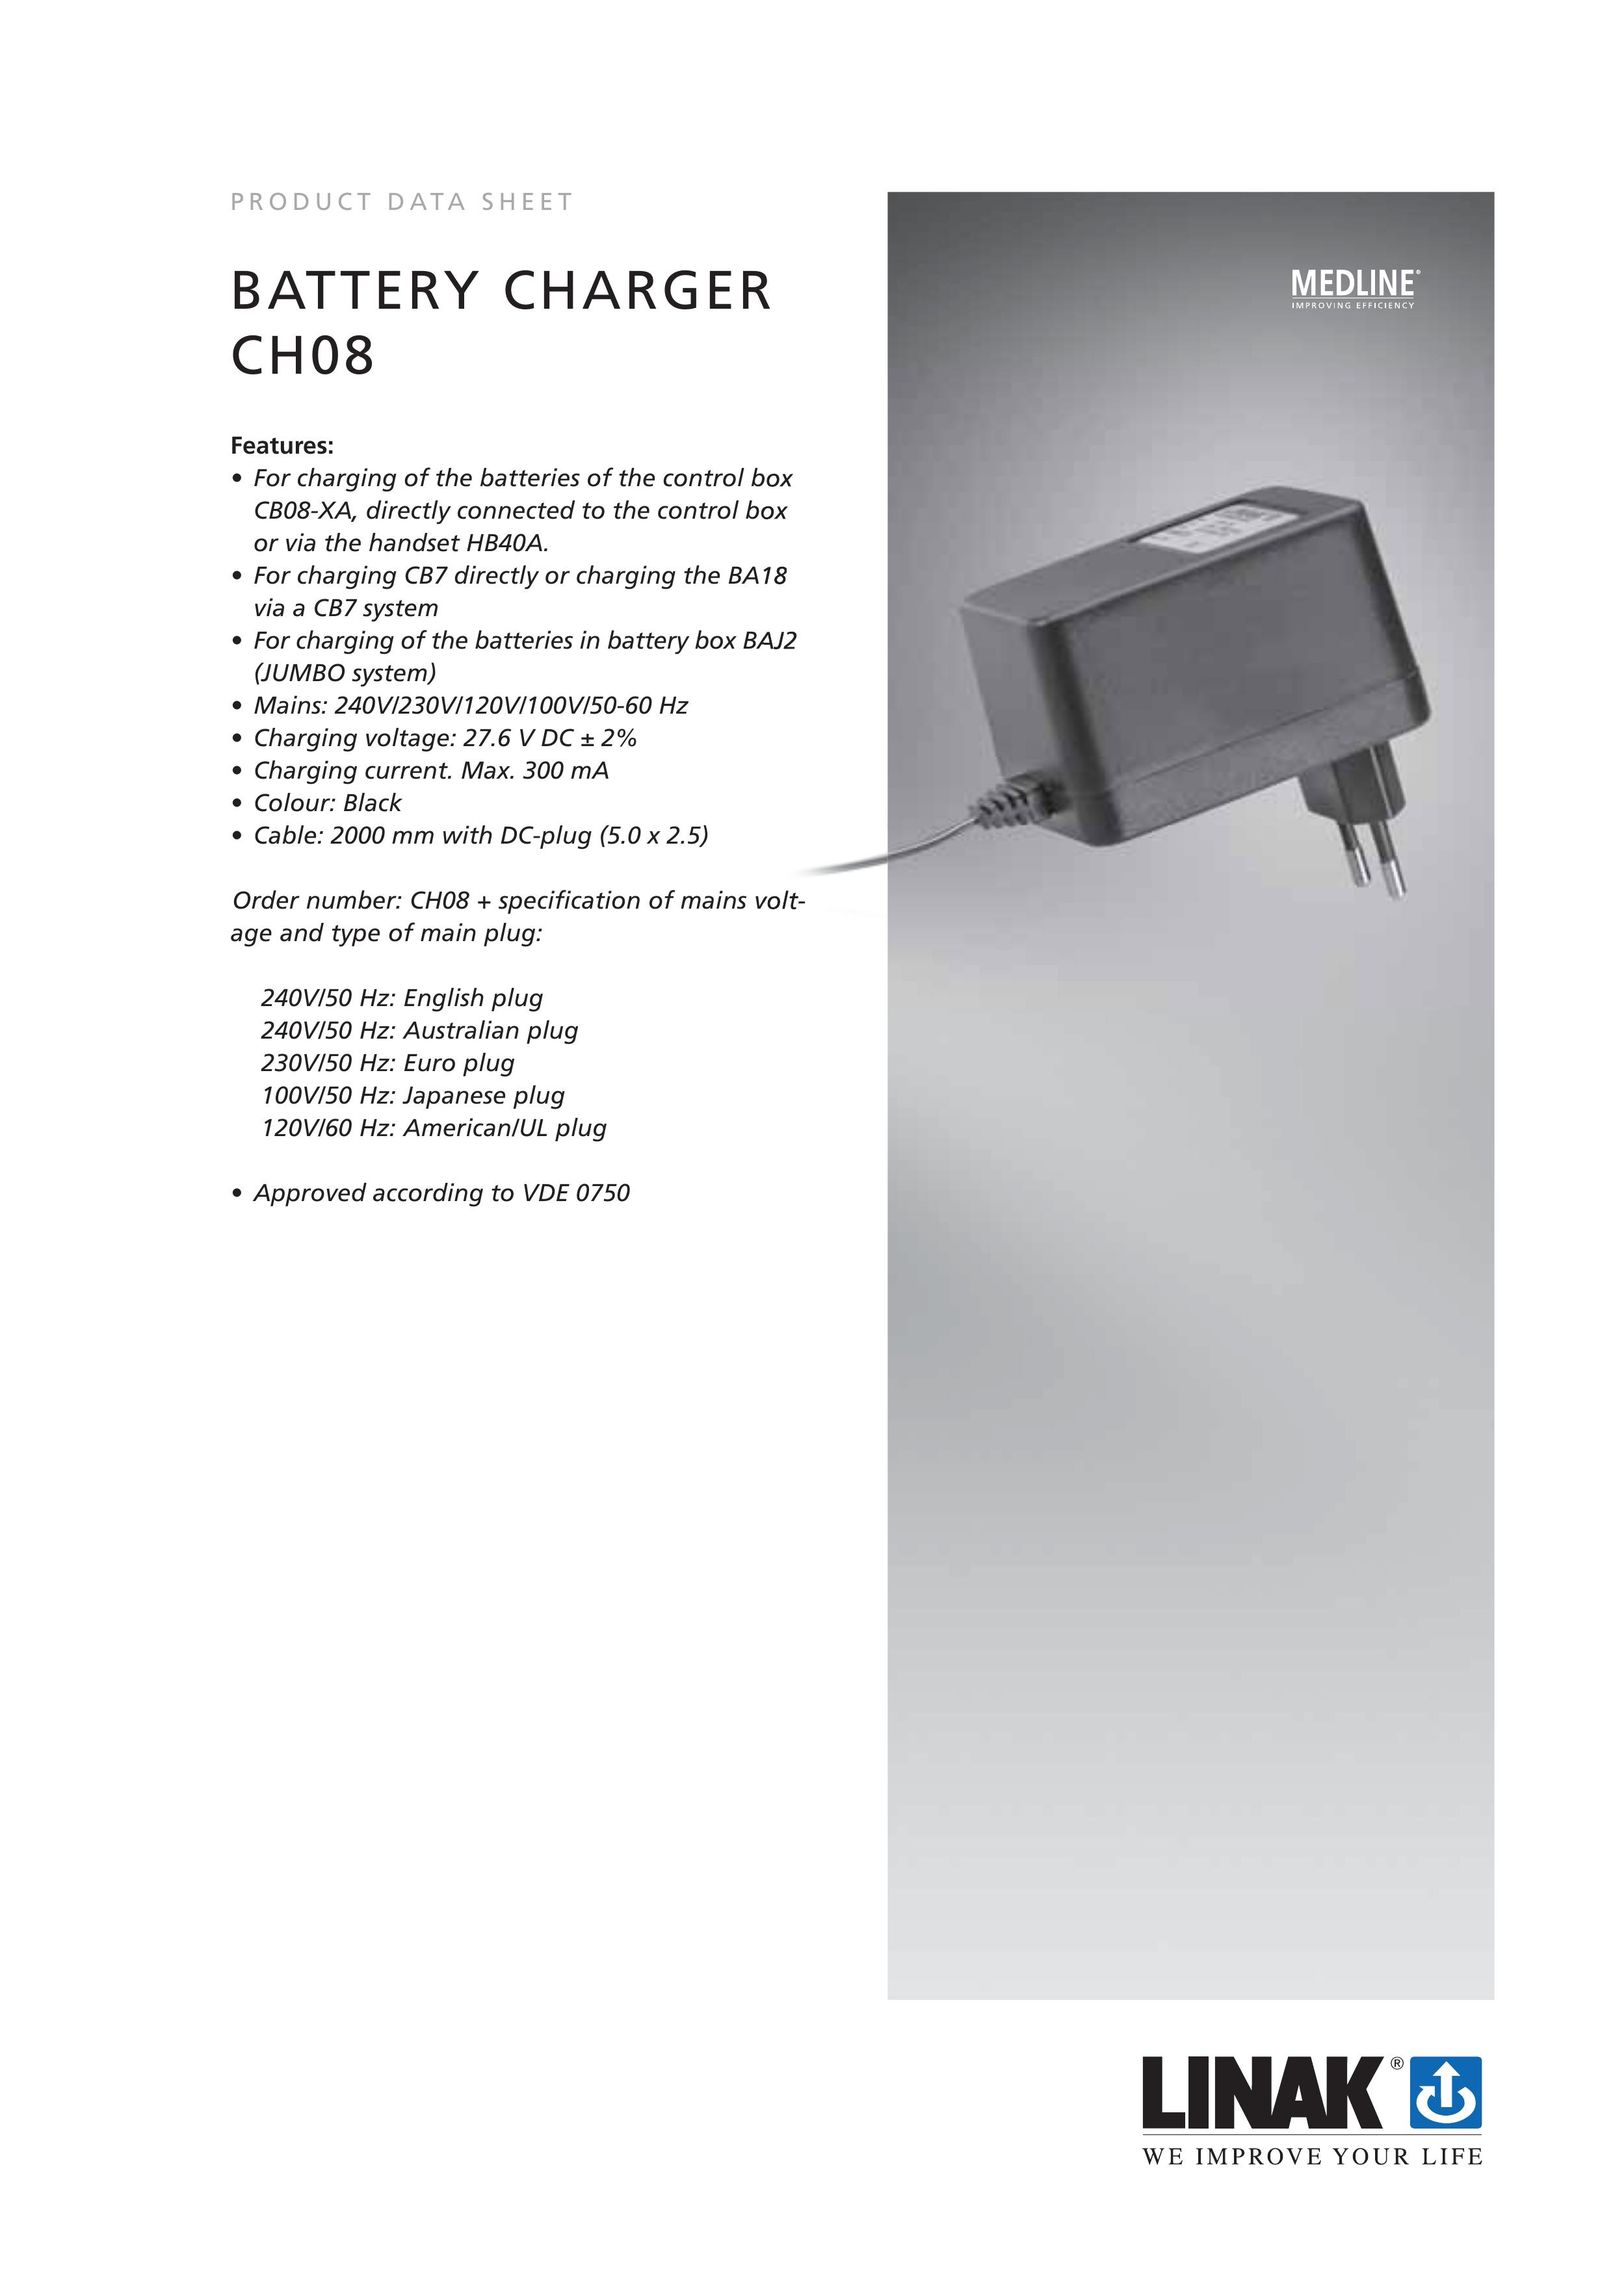 Linak CB08-XA Battery Charger User Manual